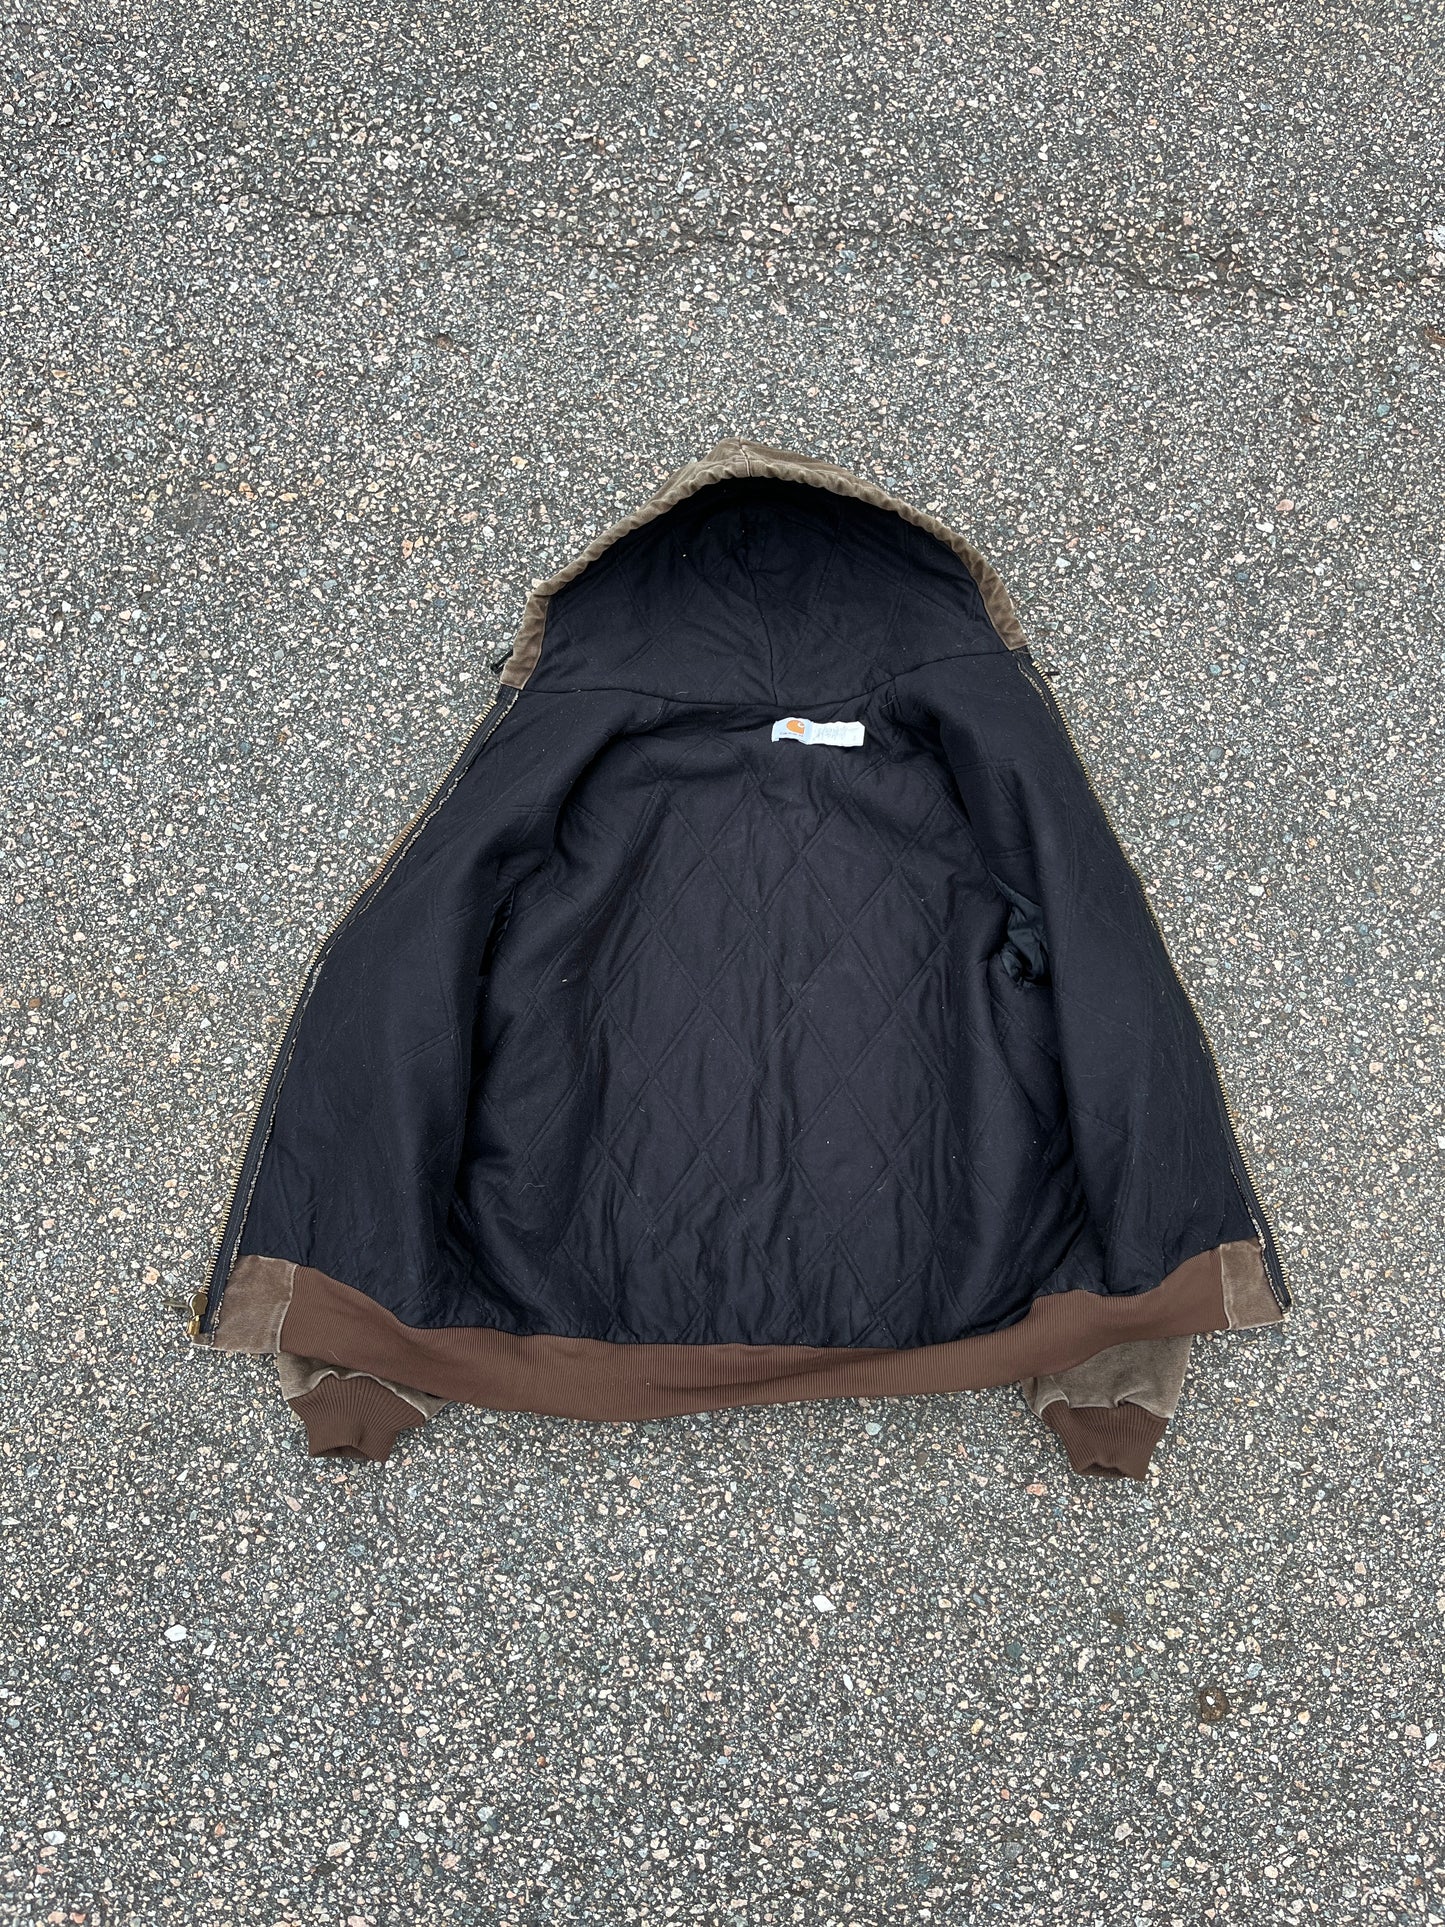 Faded Chestnut Brown Carhartt Active Jacket - XL